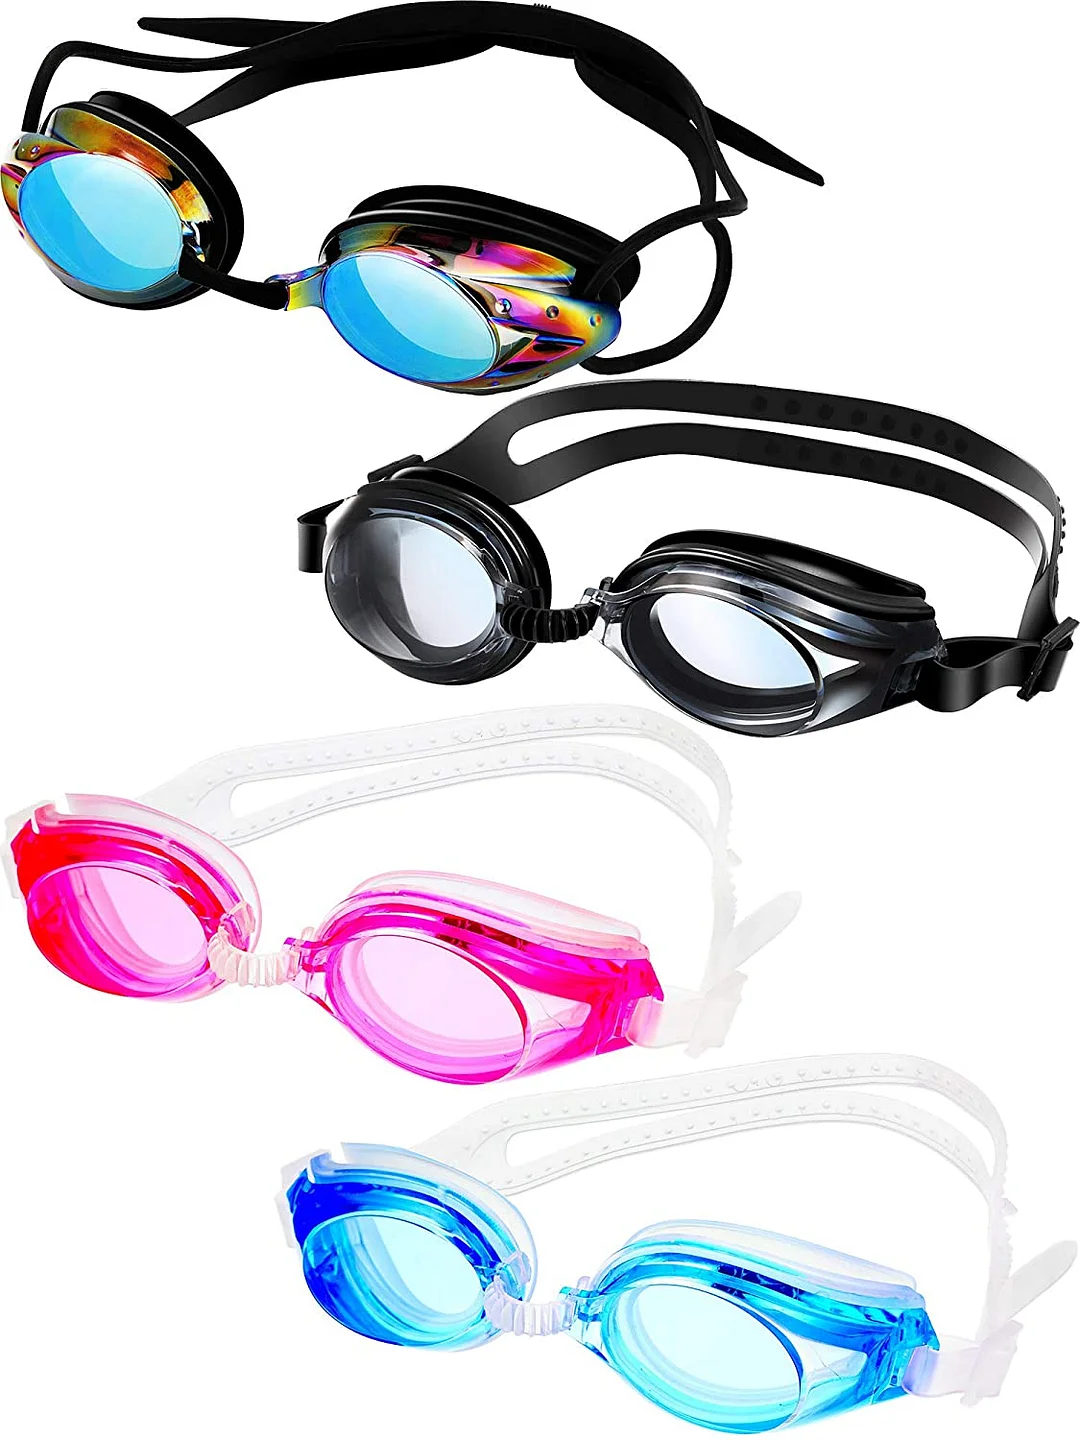 4 Pairs Swim Goggles, Swimming Goggles Anti Fog Shatterproof UV Protection Goggles